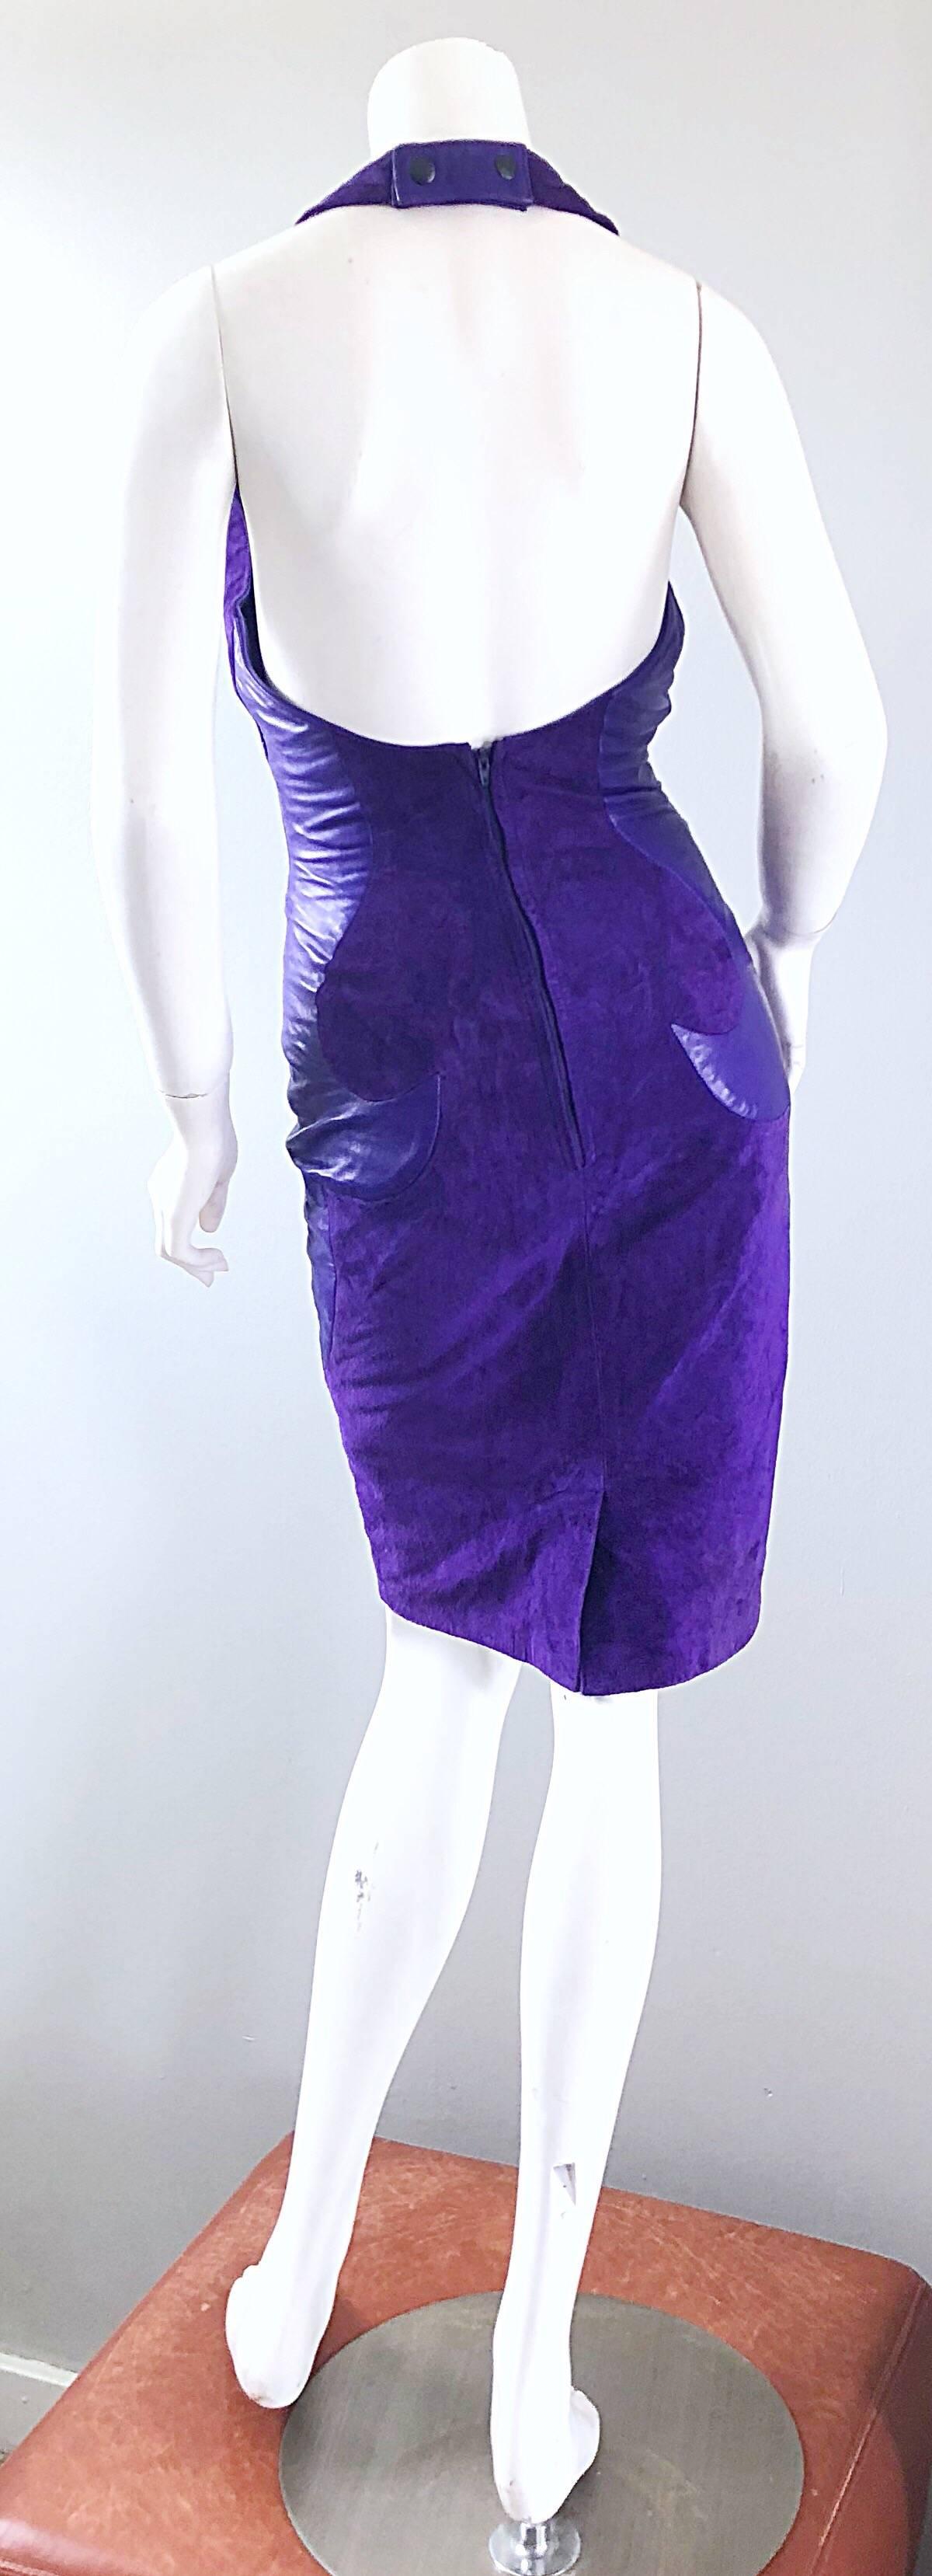 Violet Michael Hoban - Robe dos nu vintage sexy en cuir et daim violet, North Beach Leather, années 1990 en vente